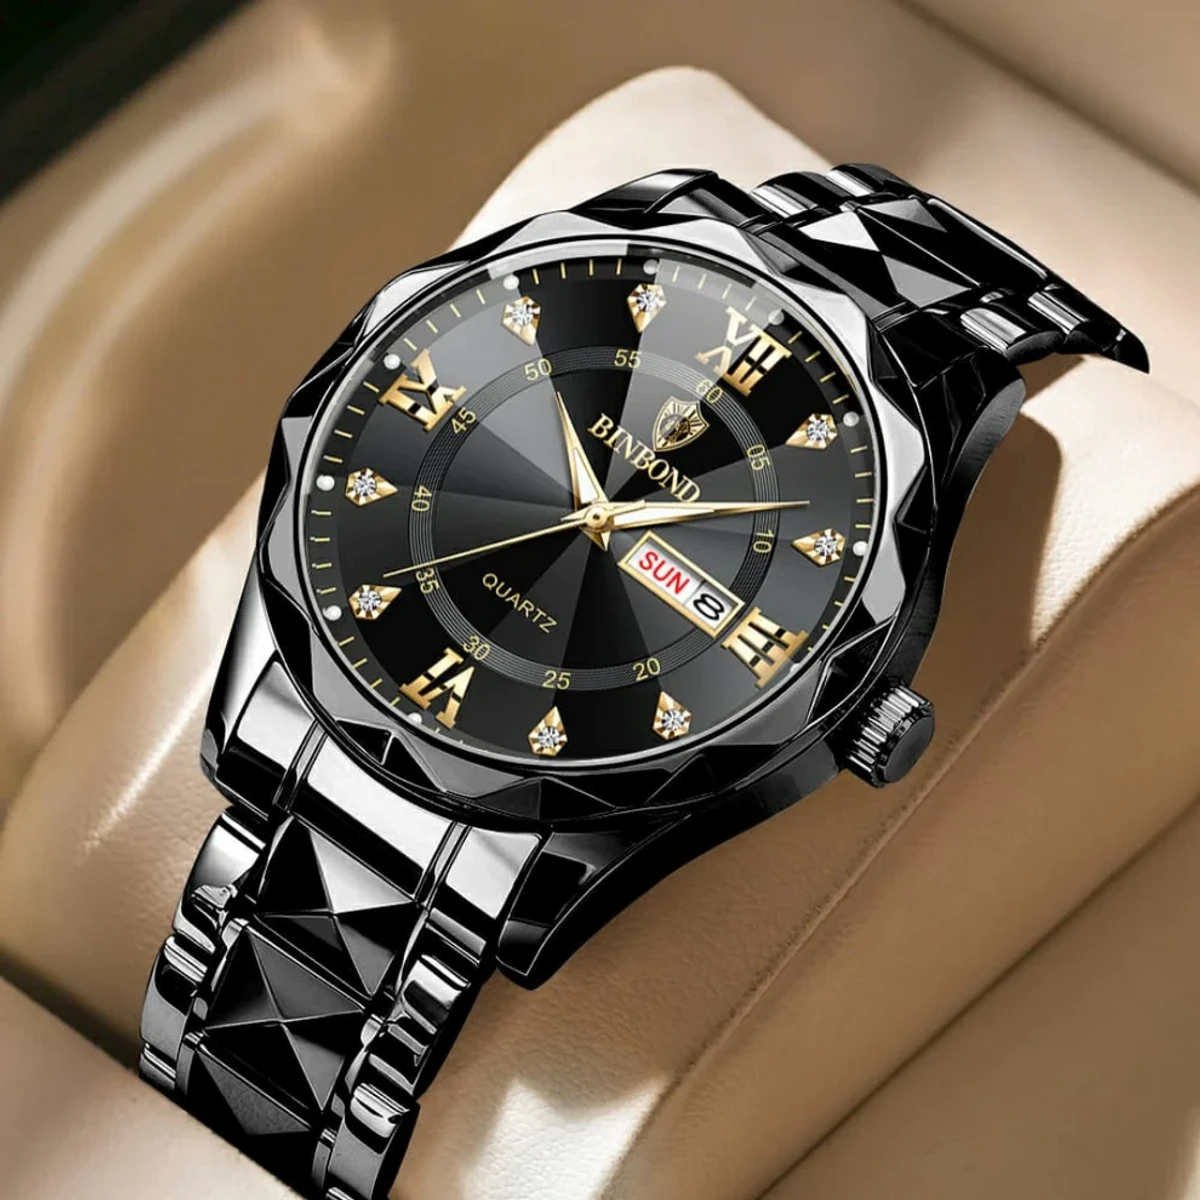 Luxury Binbond Authentic Men's Watch Waterproof Night Light Dual Calendar Watch Men's Quartz Watch Diamond Ceiling Glass- Full Black